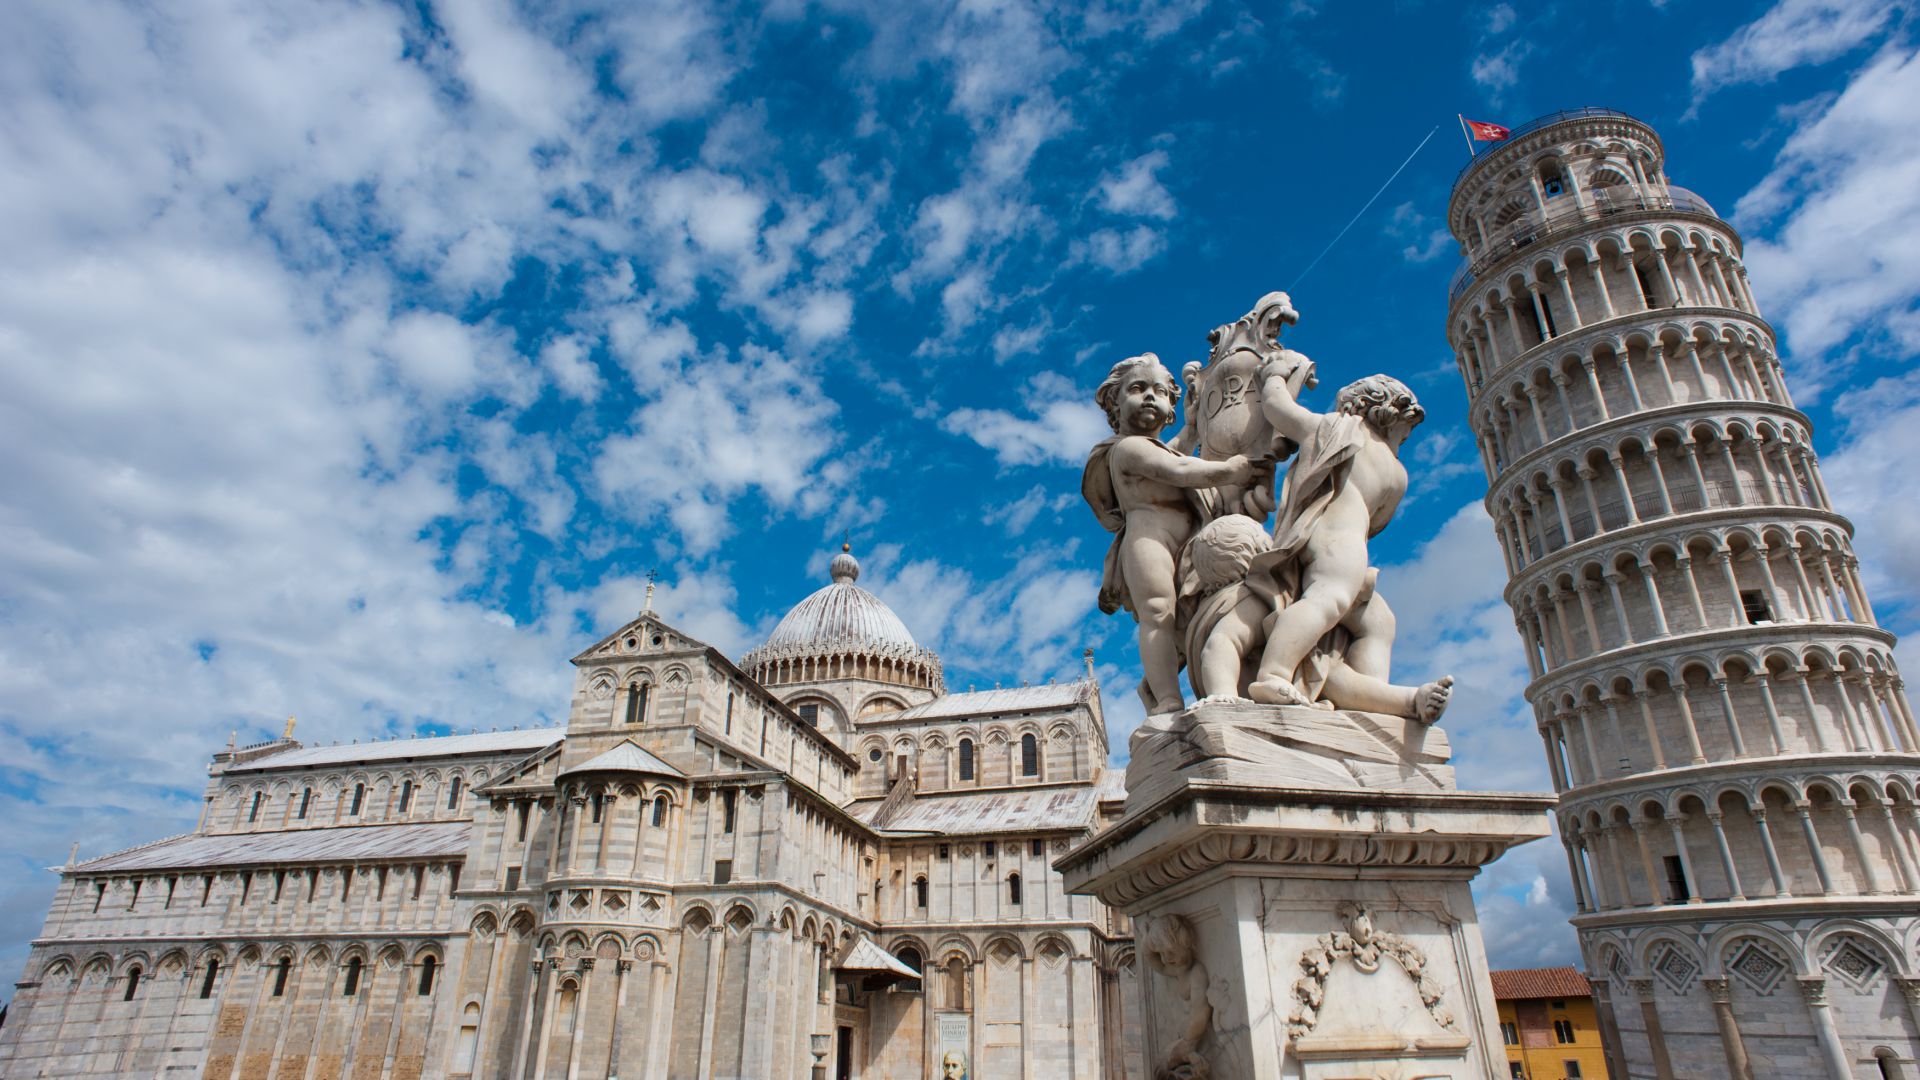 Пизанская башня, Италия, Туризм, Путешествие, Leaning Tower of Pisa, Italy, Travel, Tourism (horizontal)